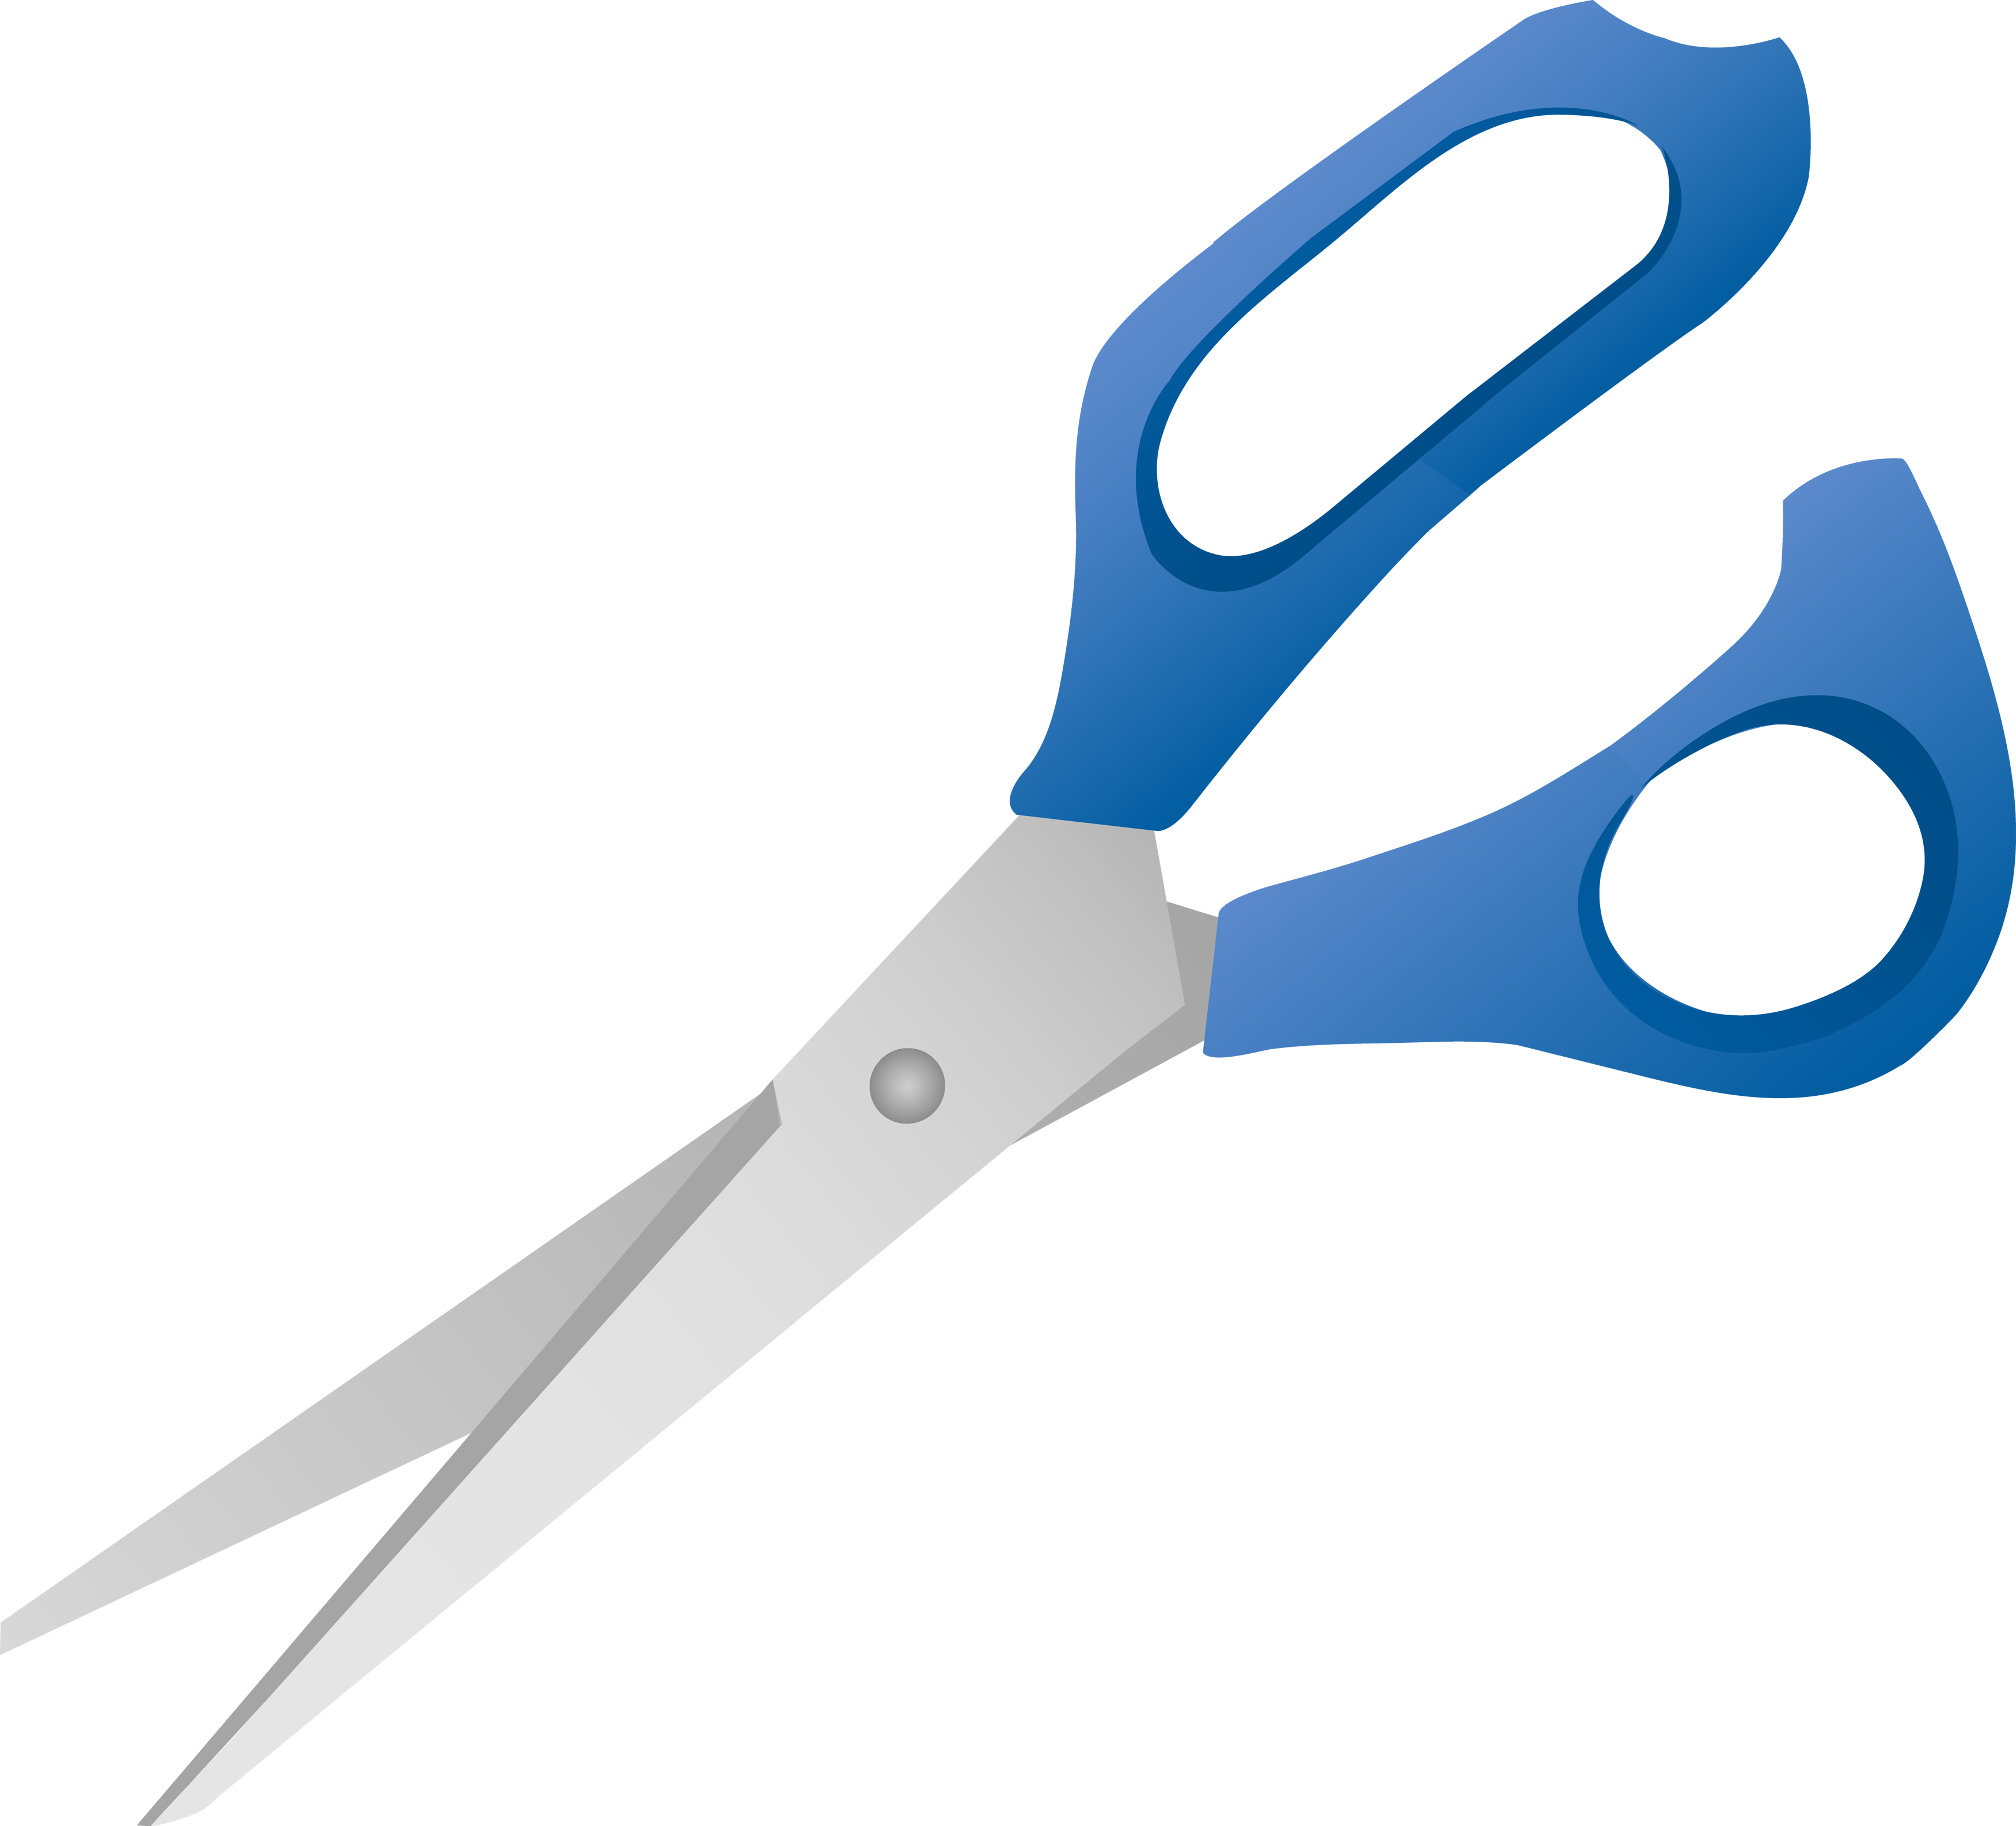 Blue scissors PNG image download